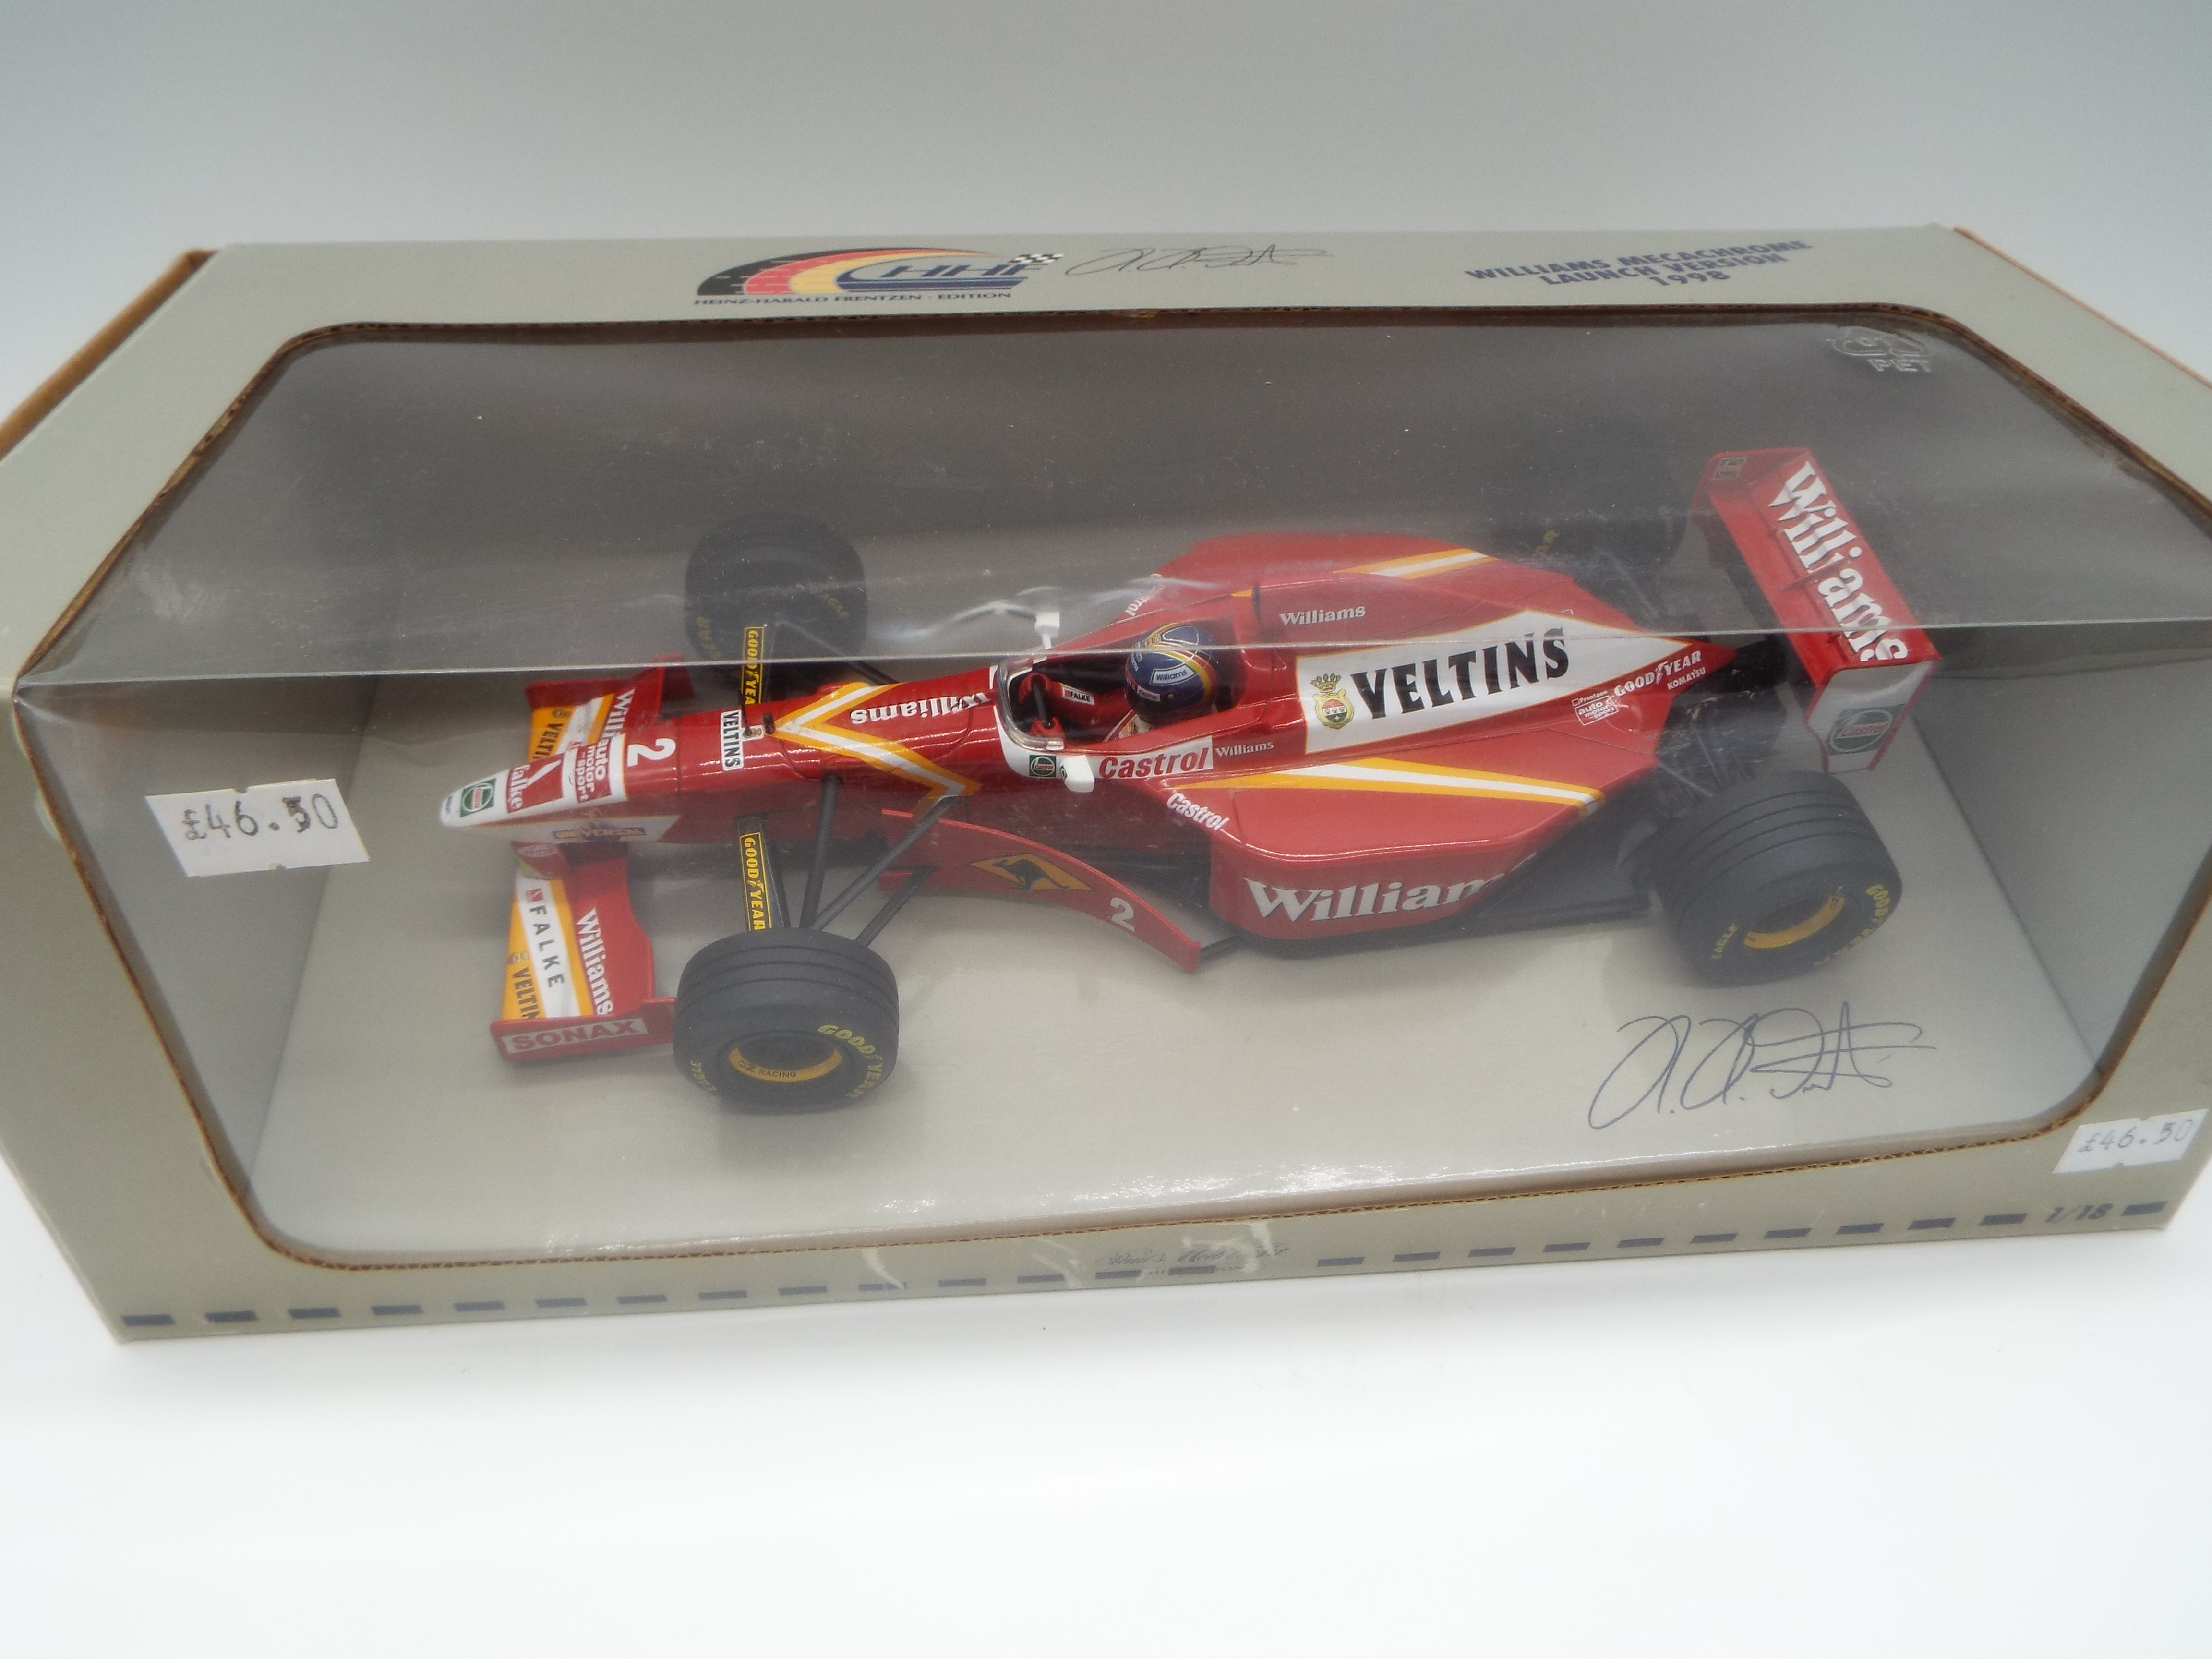 HHF Heinz-Harald Frentzen - a 1:18 scale model diecast racing car,